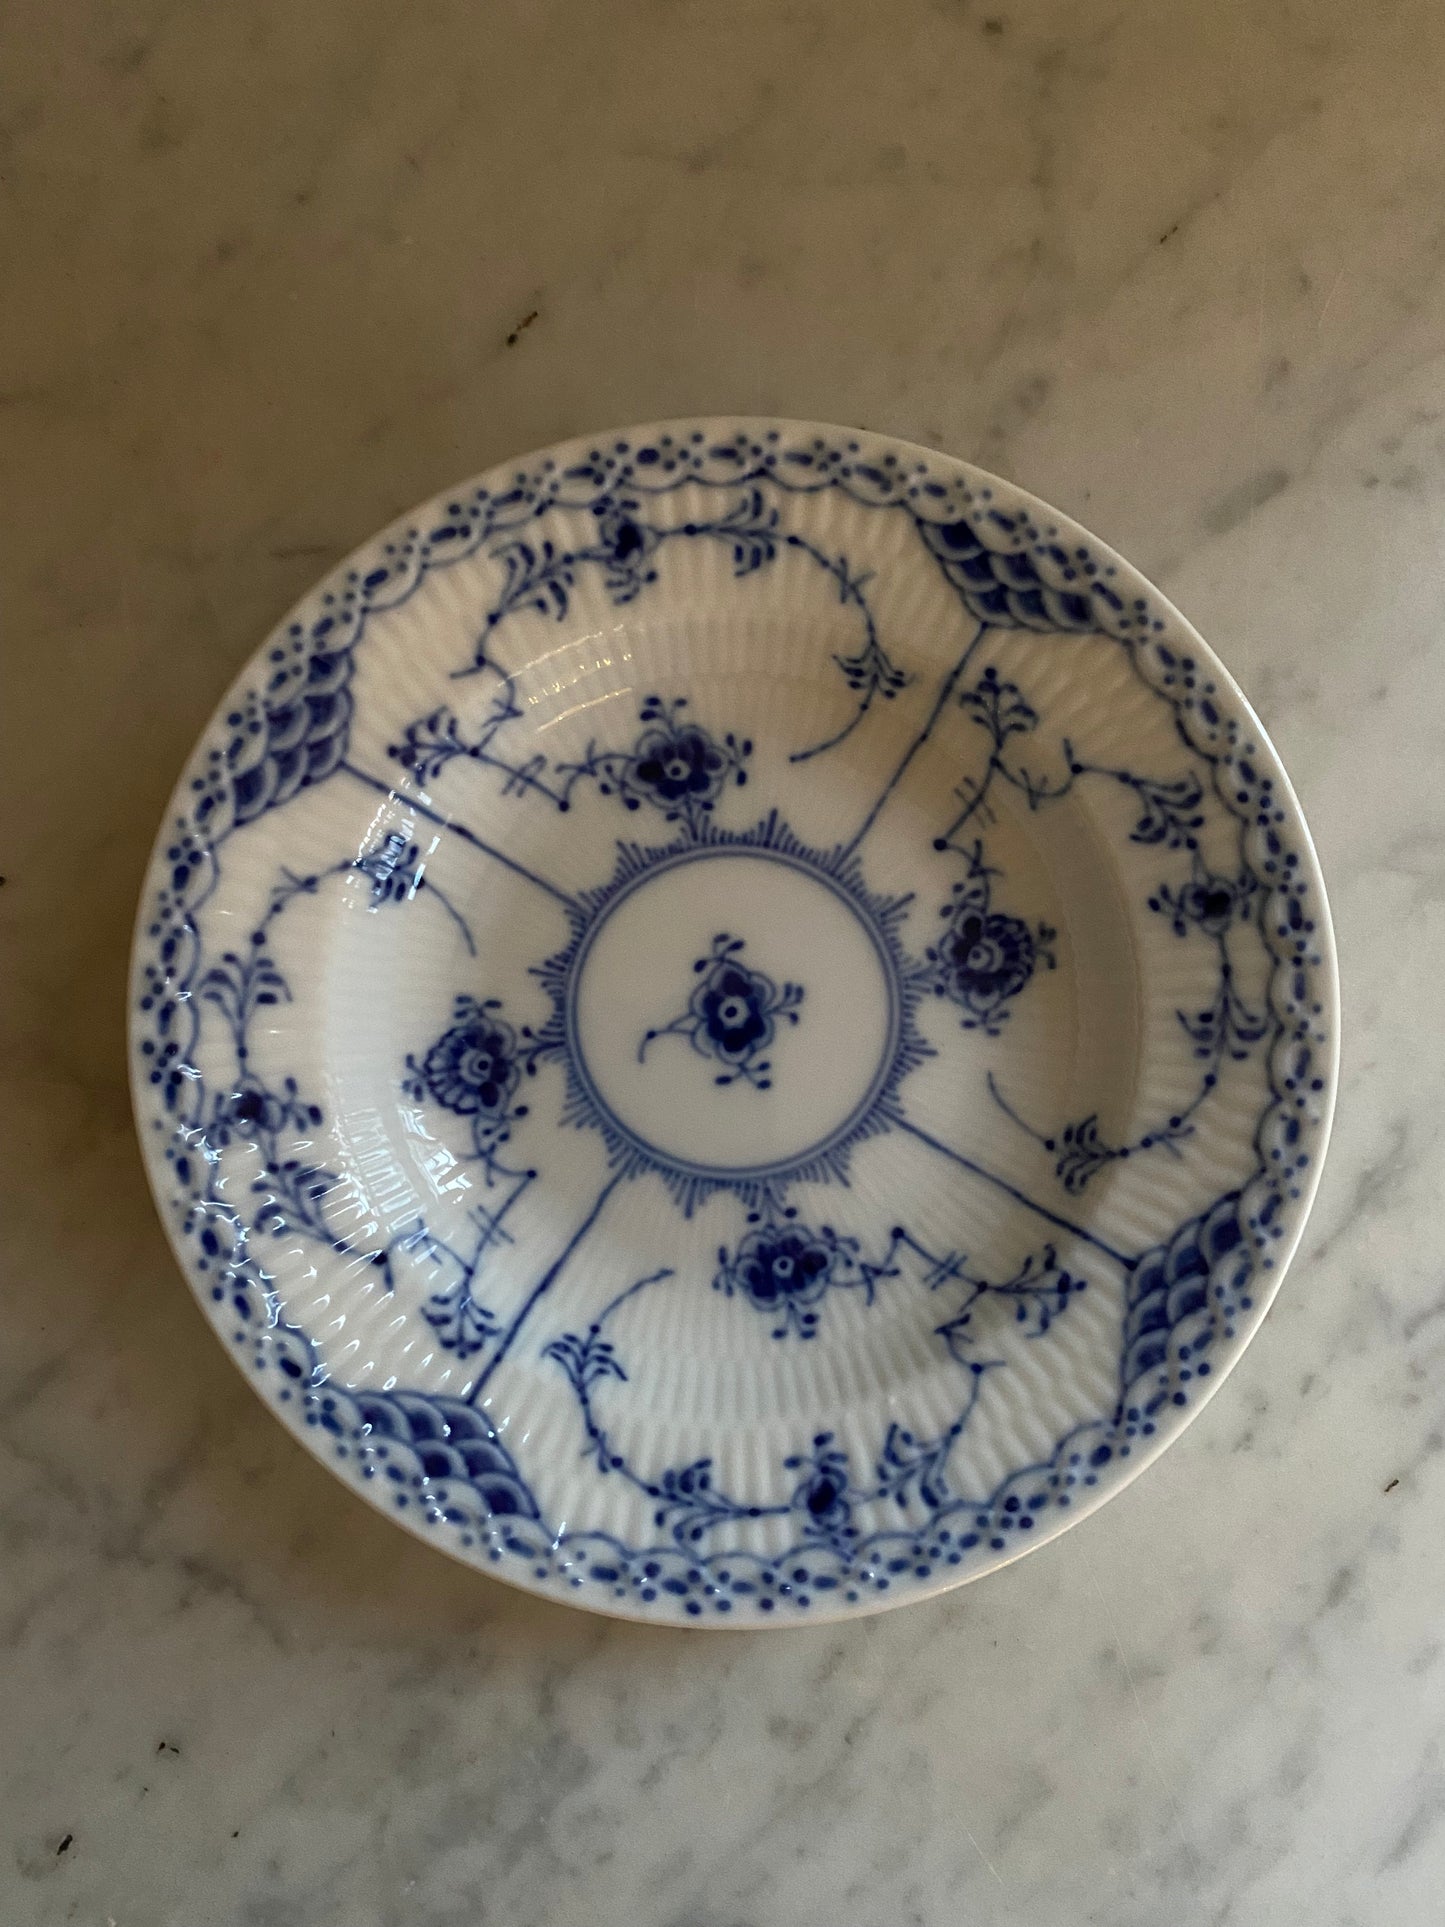 6 bowls "Musselmalet" from Royal Copenhagen